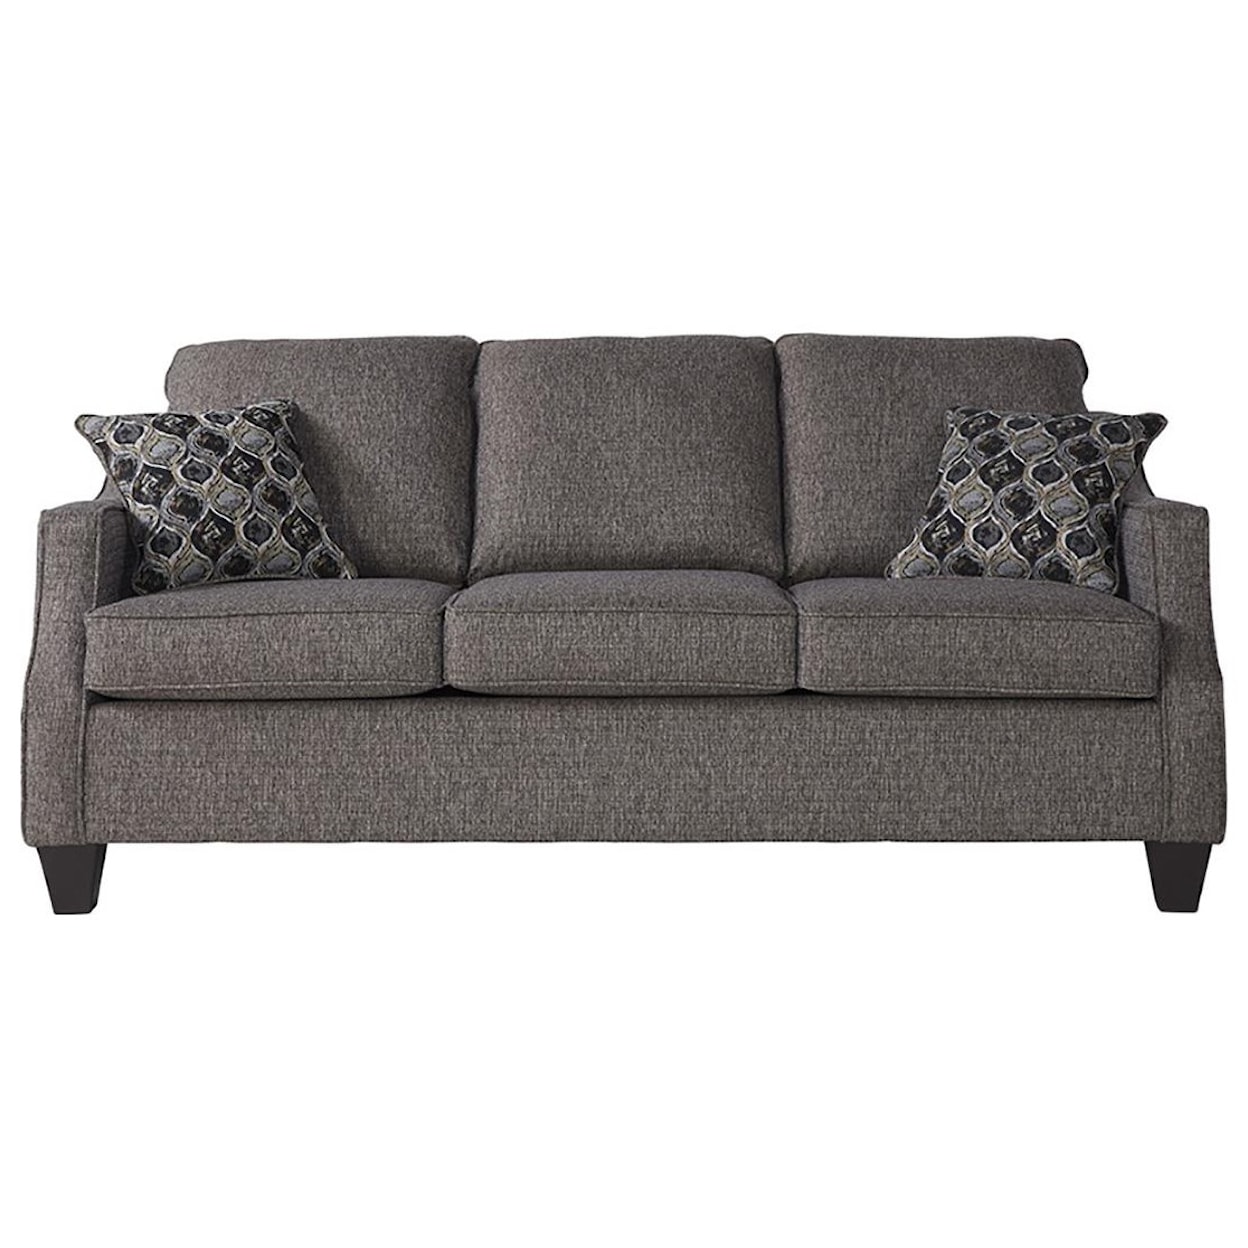 Serta Upholstery by Hughes Furniture 10400 Sofa